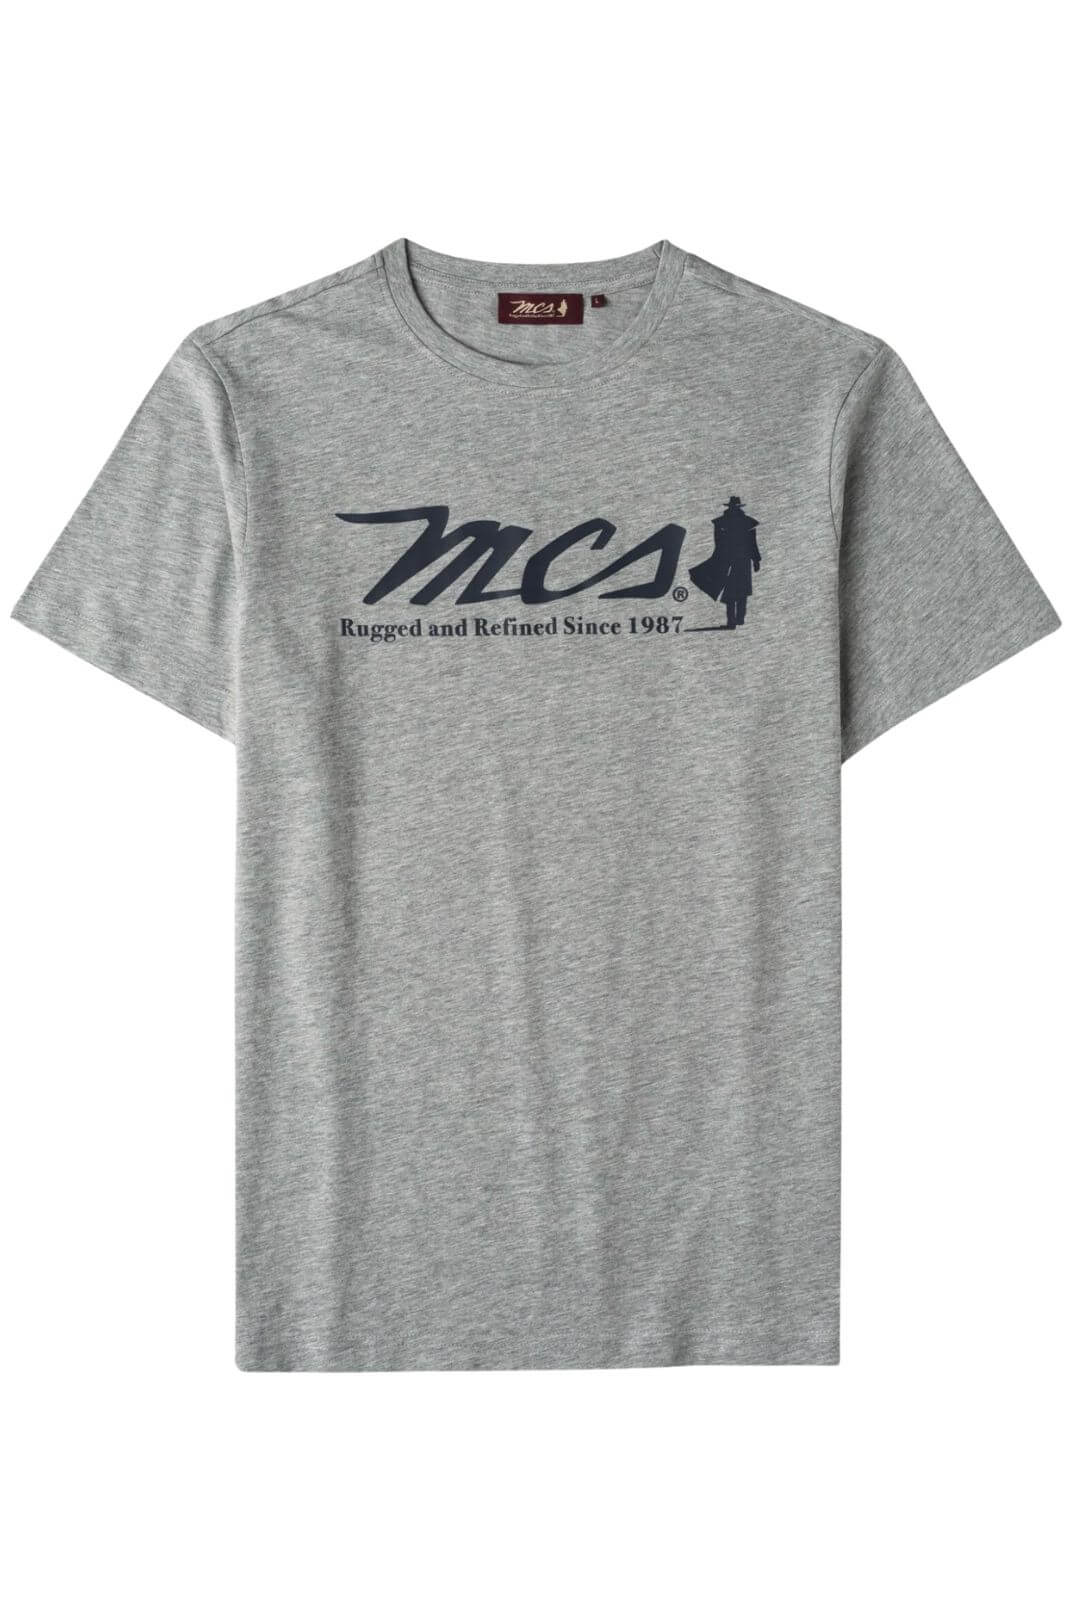 MCS T-Shirt Uomo